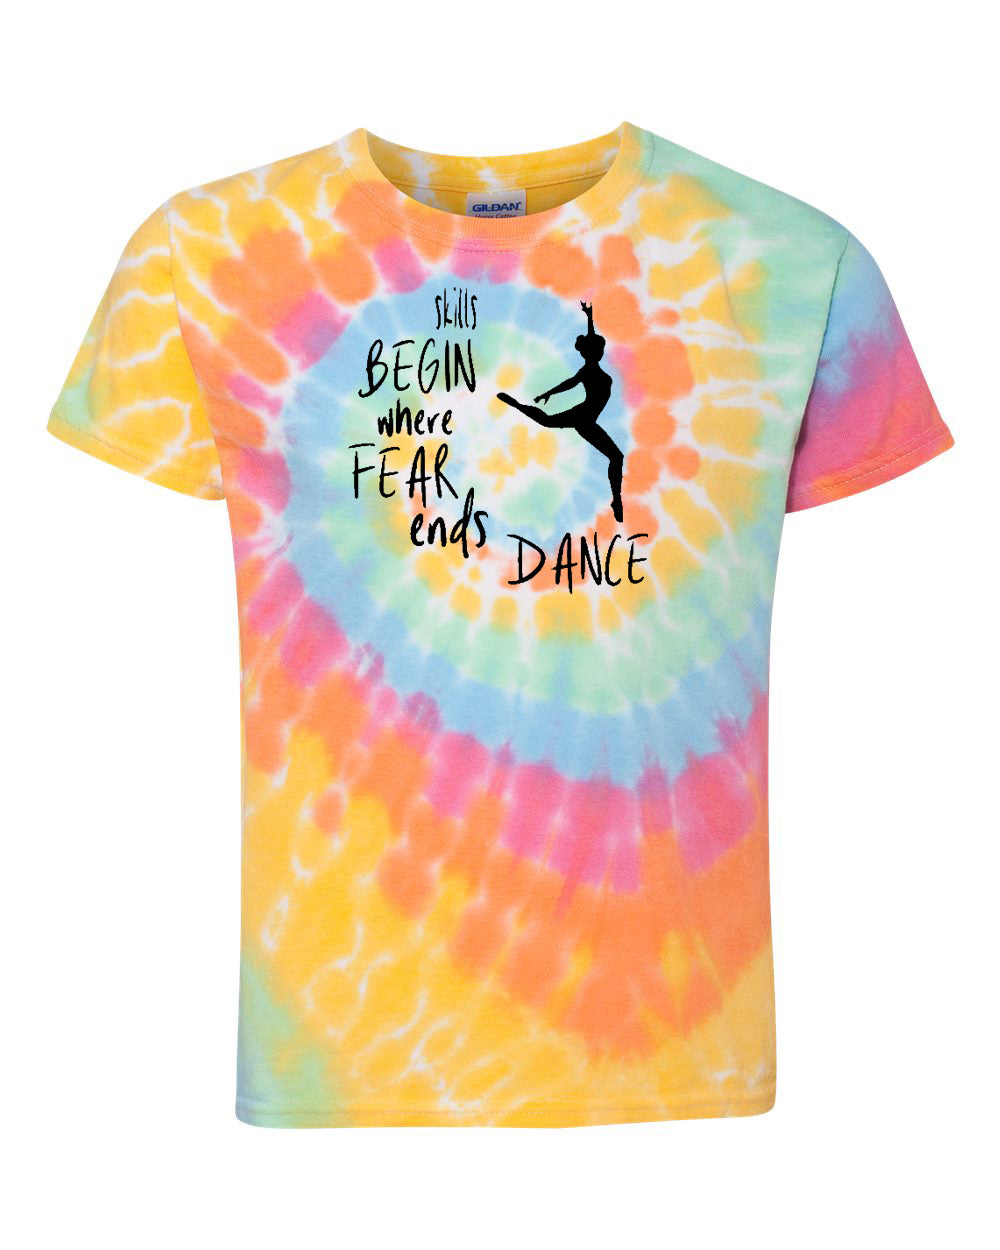 Skills Begin Where Fear Ends Dance Youth Tie Dye T-Shirt